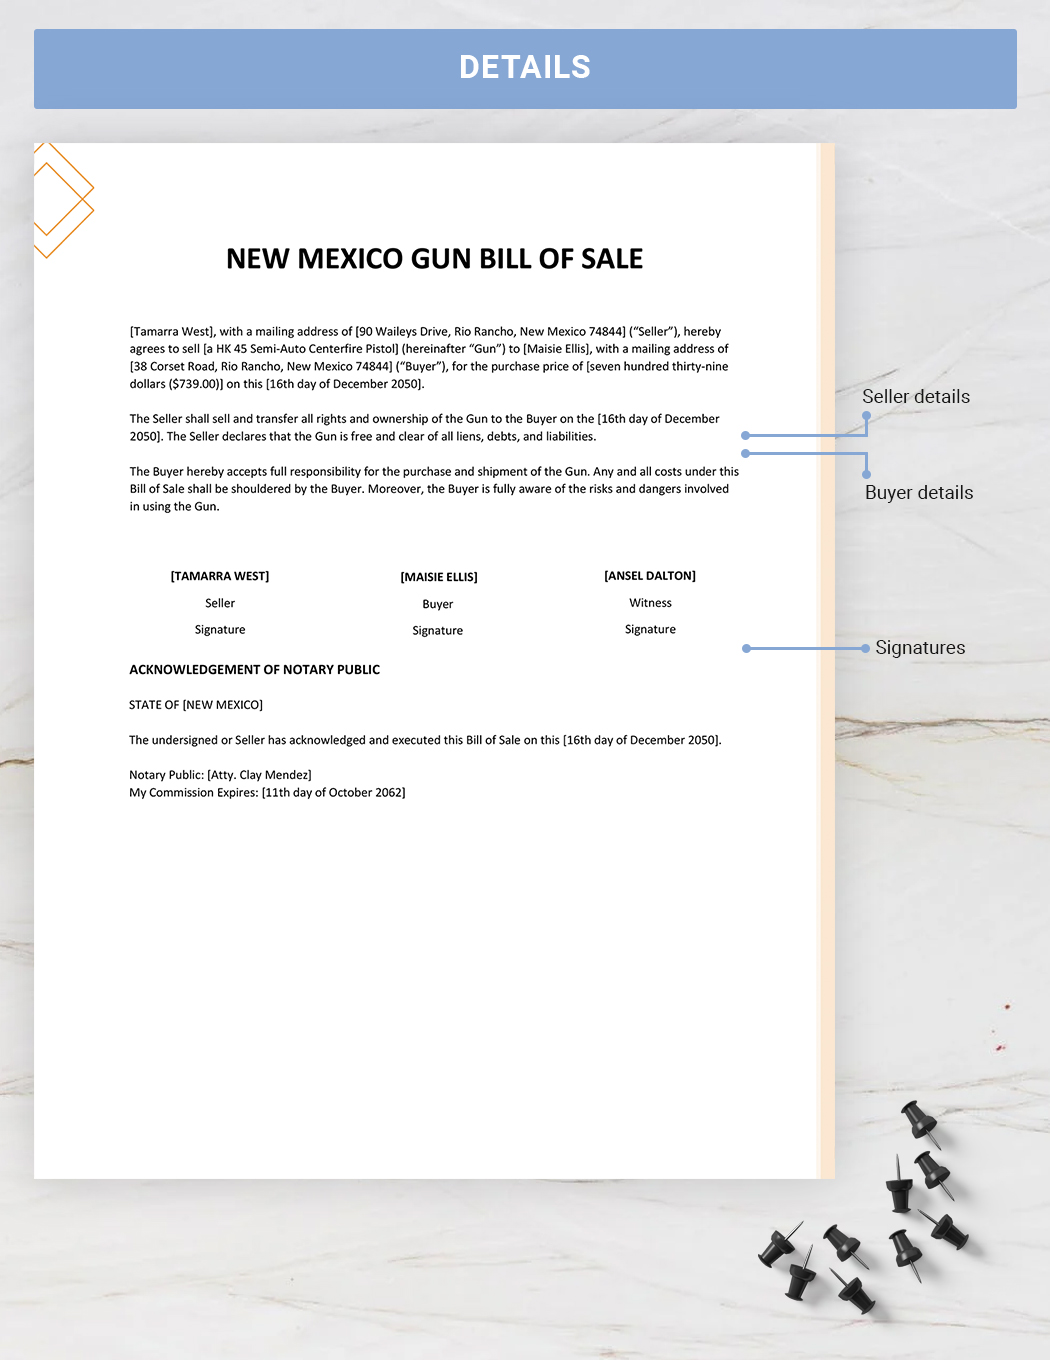 New Mexico Firearm / Gun Bill of Sale Template